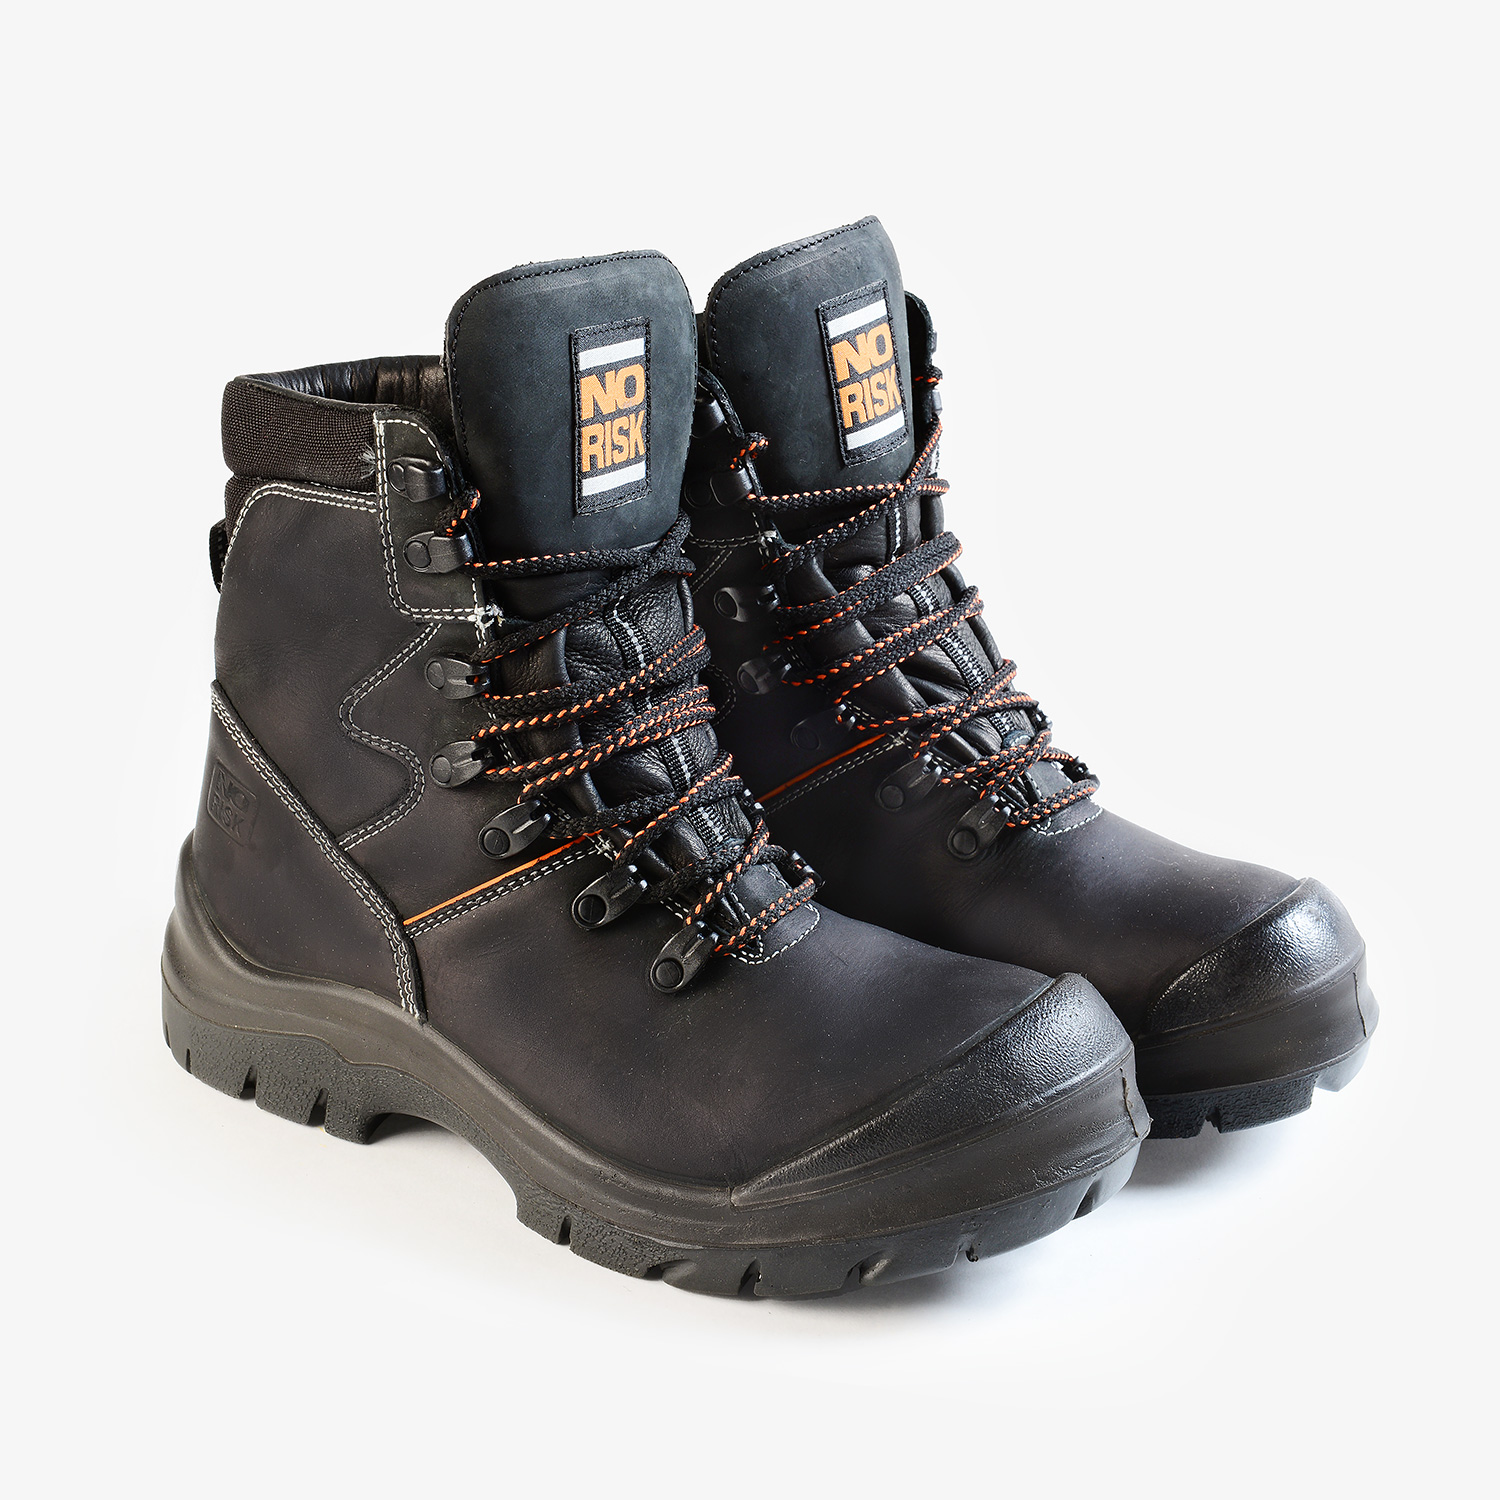 ALBERTA winter boots S3 SRC composite toe cap 